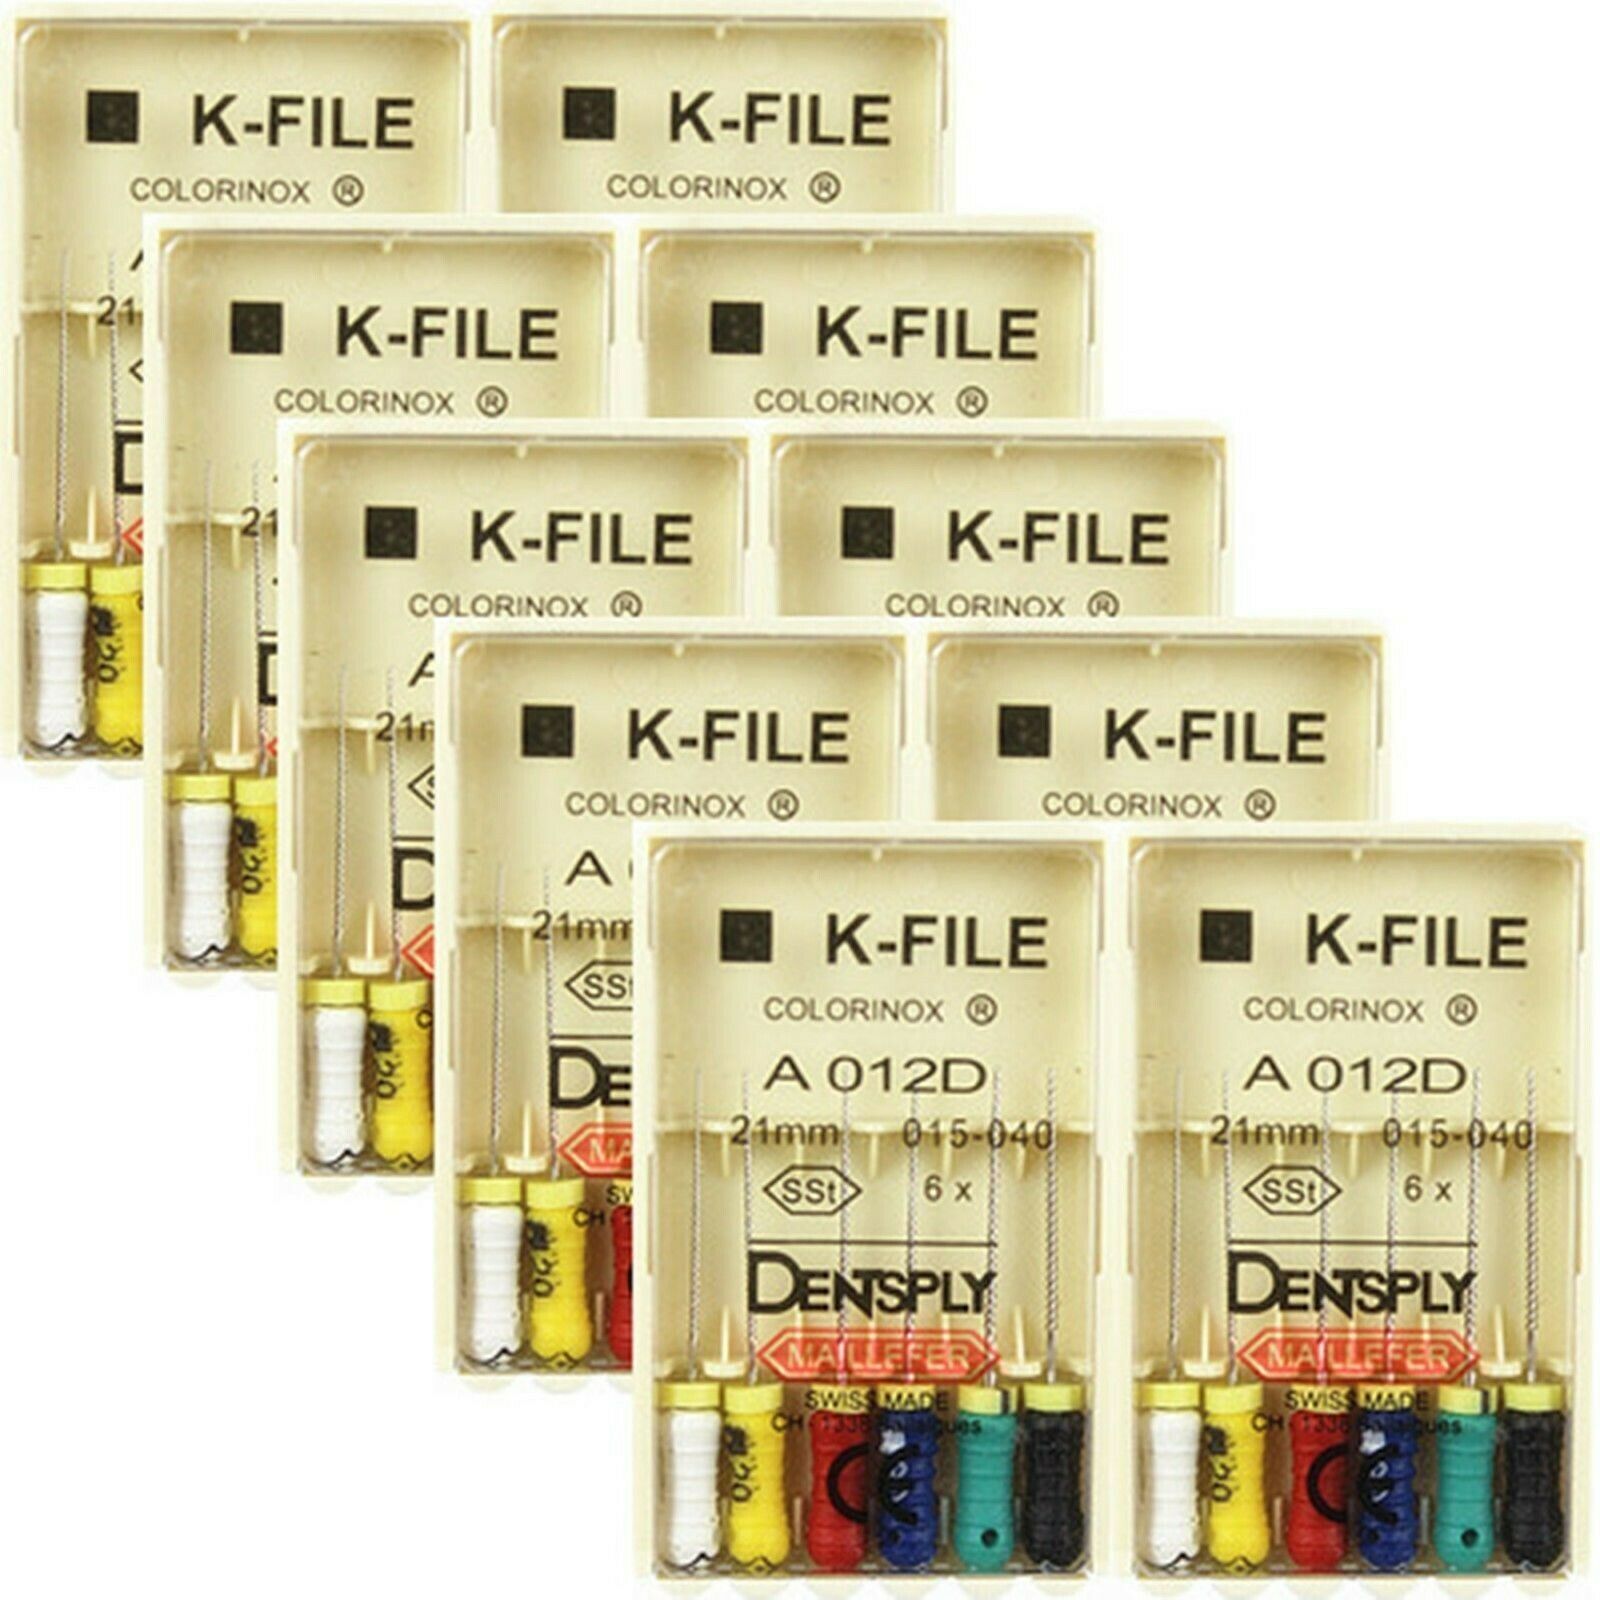 Dentsply Maillefer K-file Endodontic stainless steel (6-80) (21, 25 ,31mm) 6/Pak